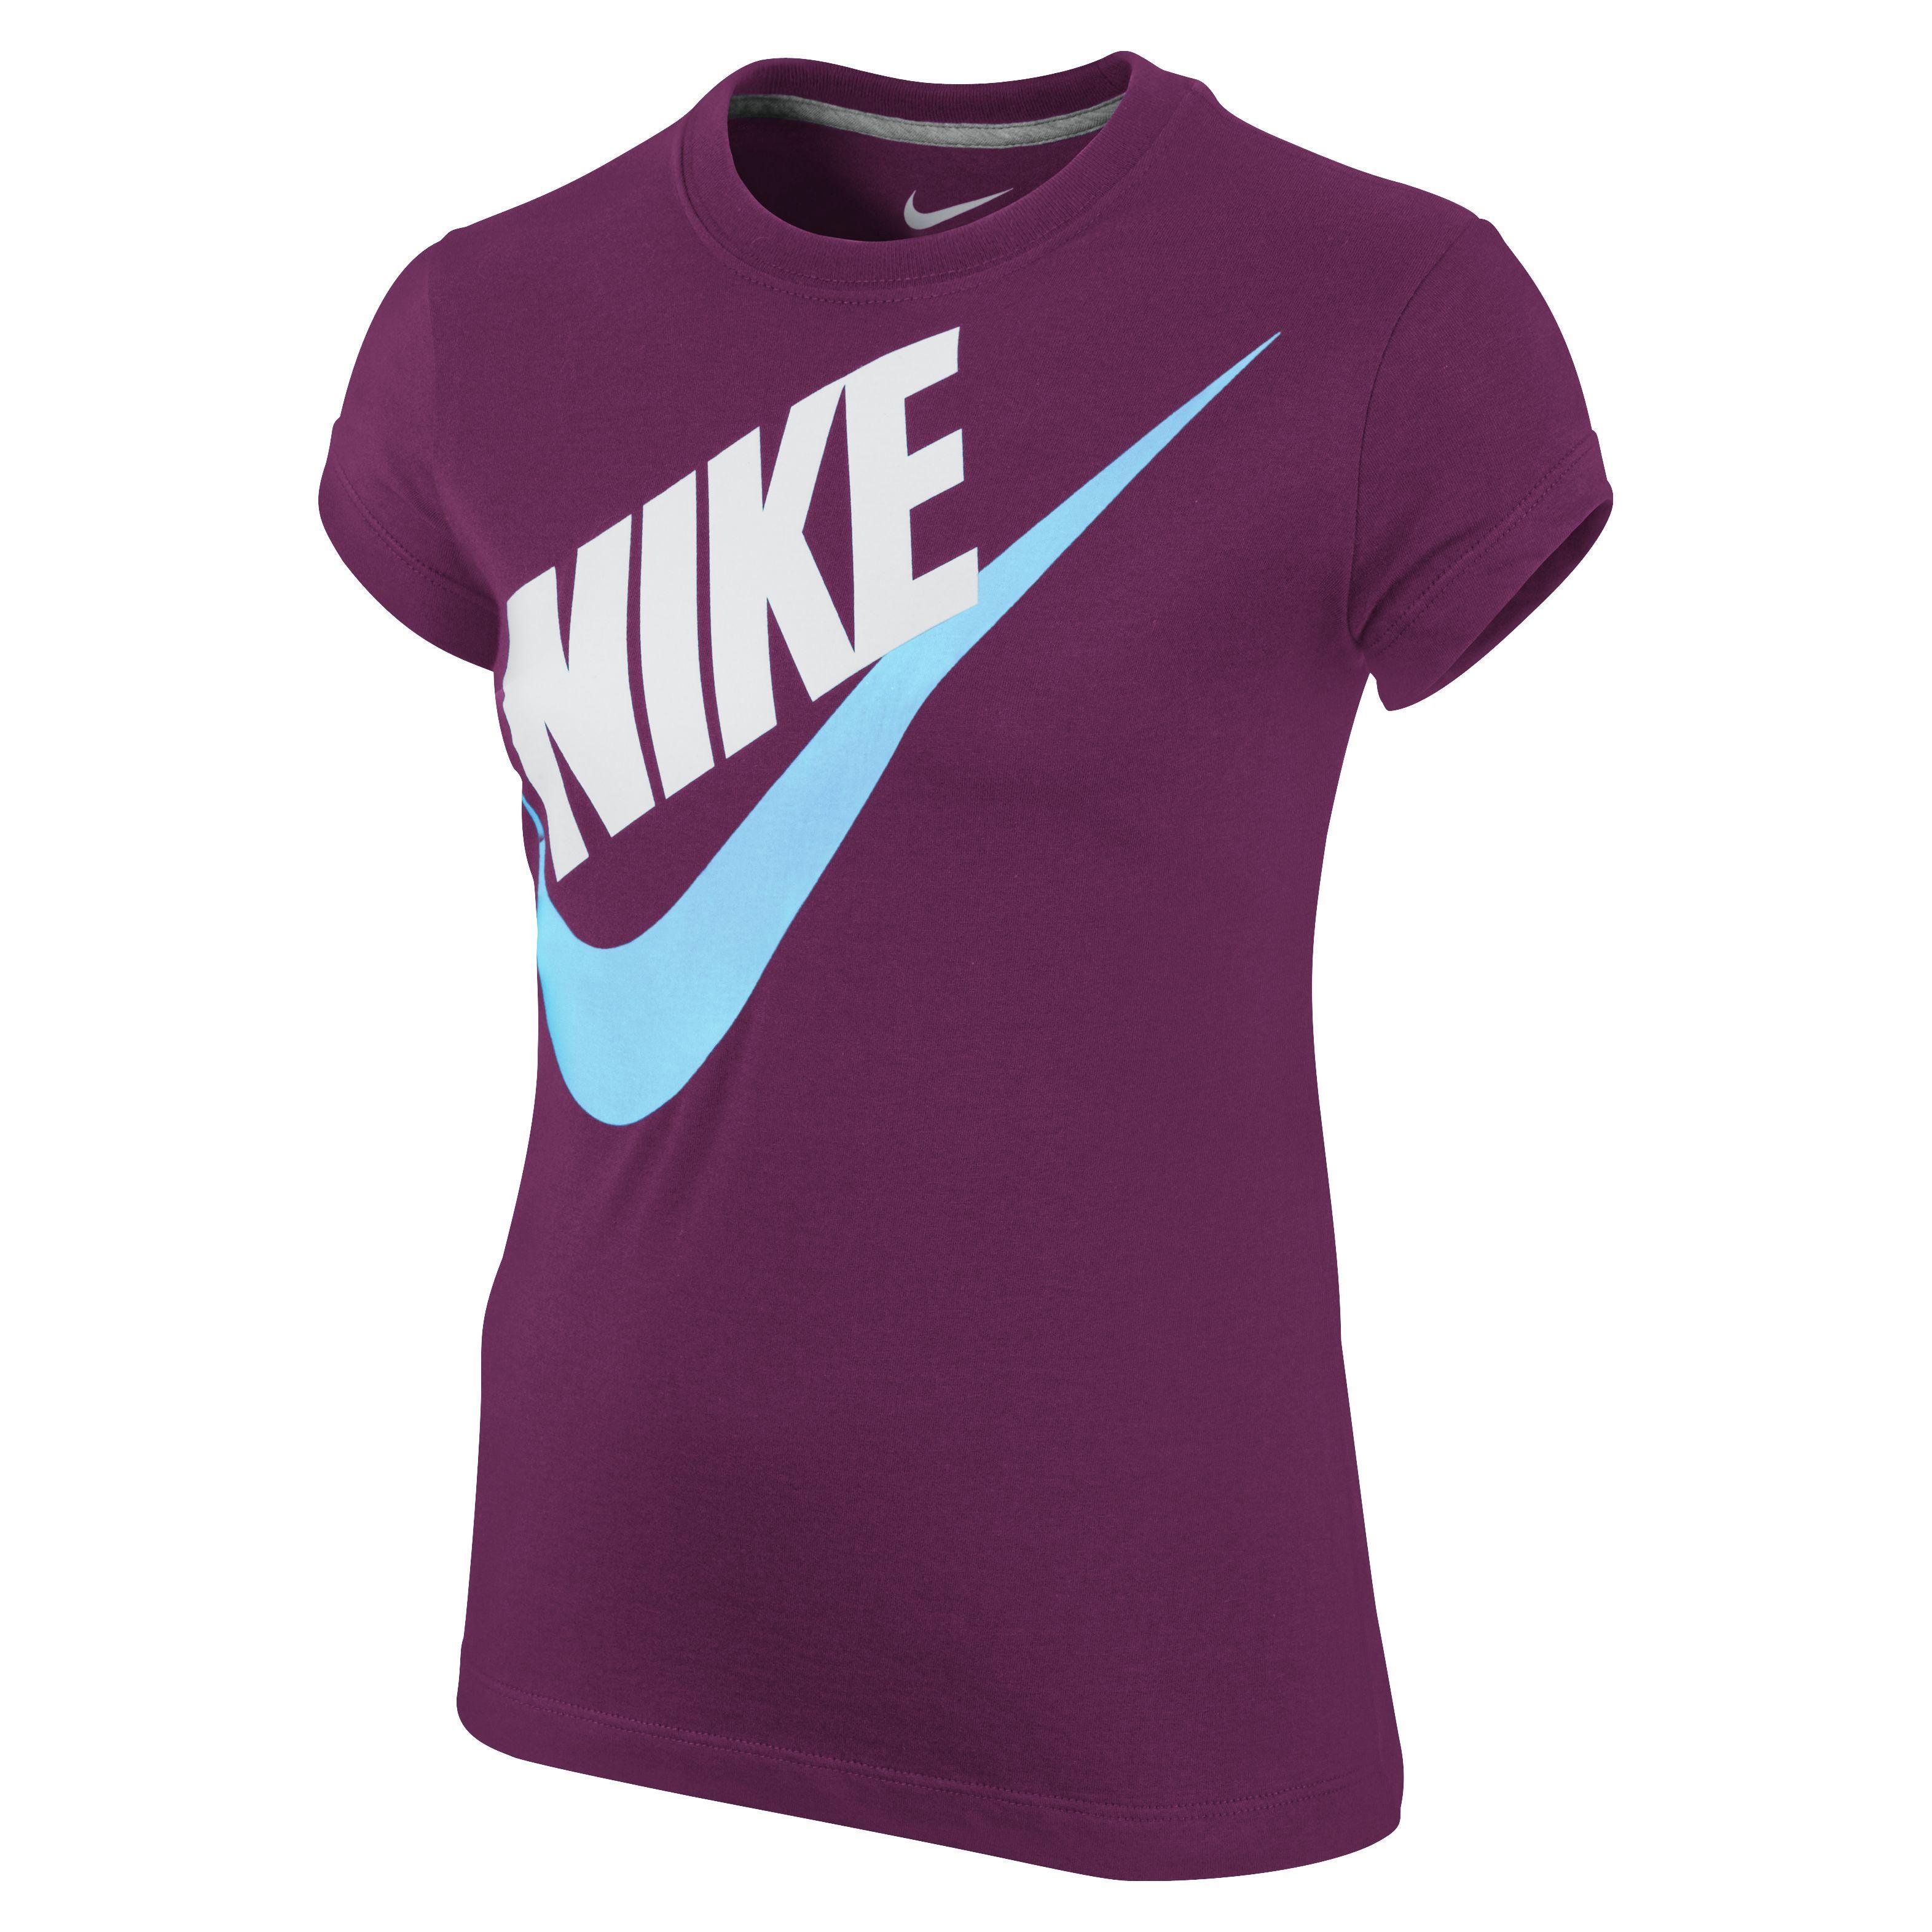 Nike Girls Glam Pack Futura T-Shirt - Purple - Tennisnuts.com